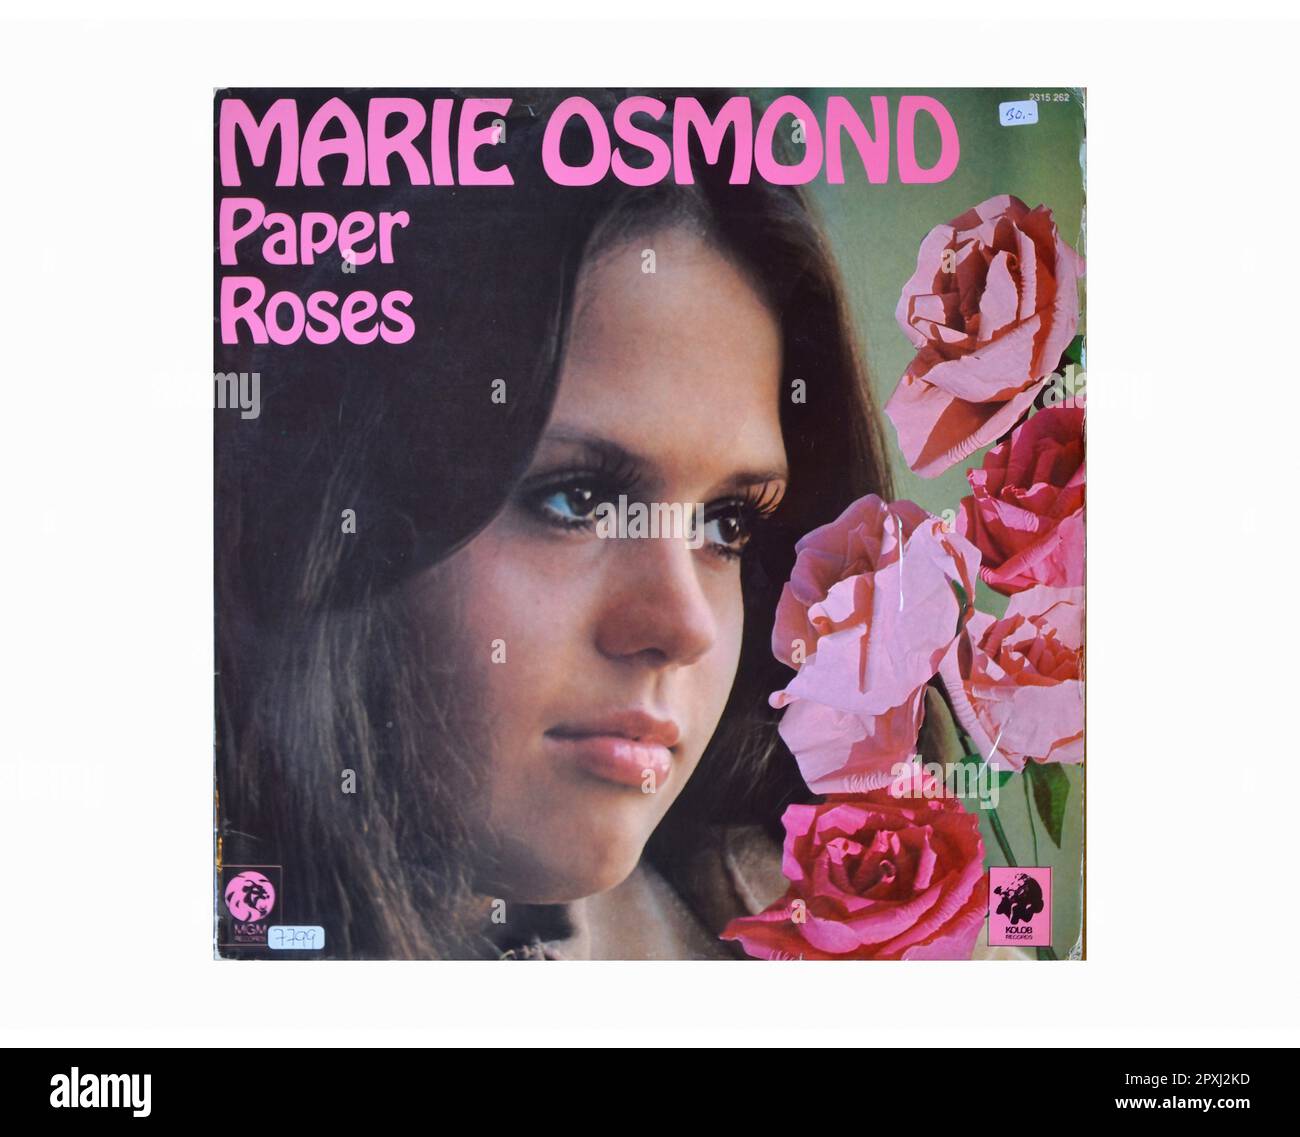 Marie Osmond - Paper Roses - Vintage L.P Music Vinyl Record Stock Photo -  Alamy